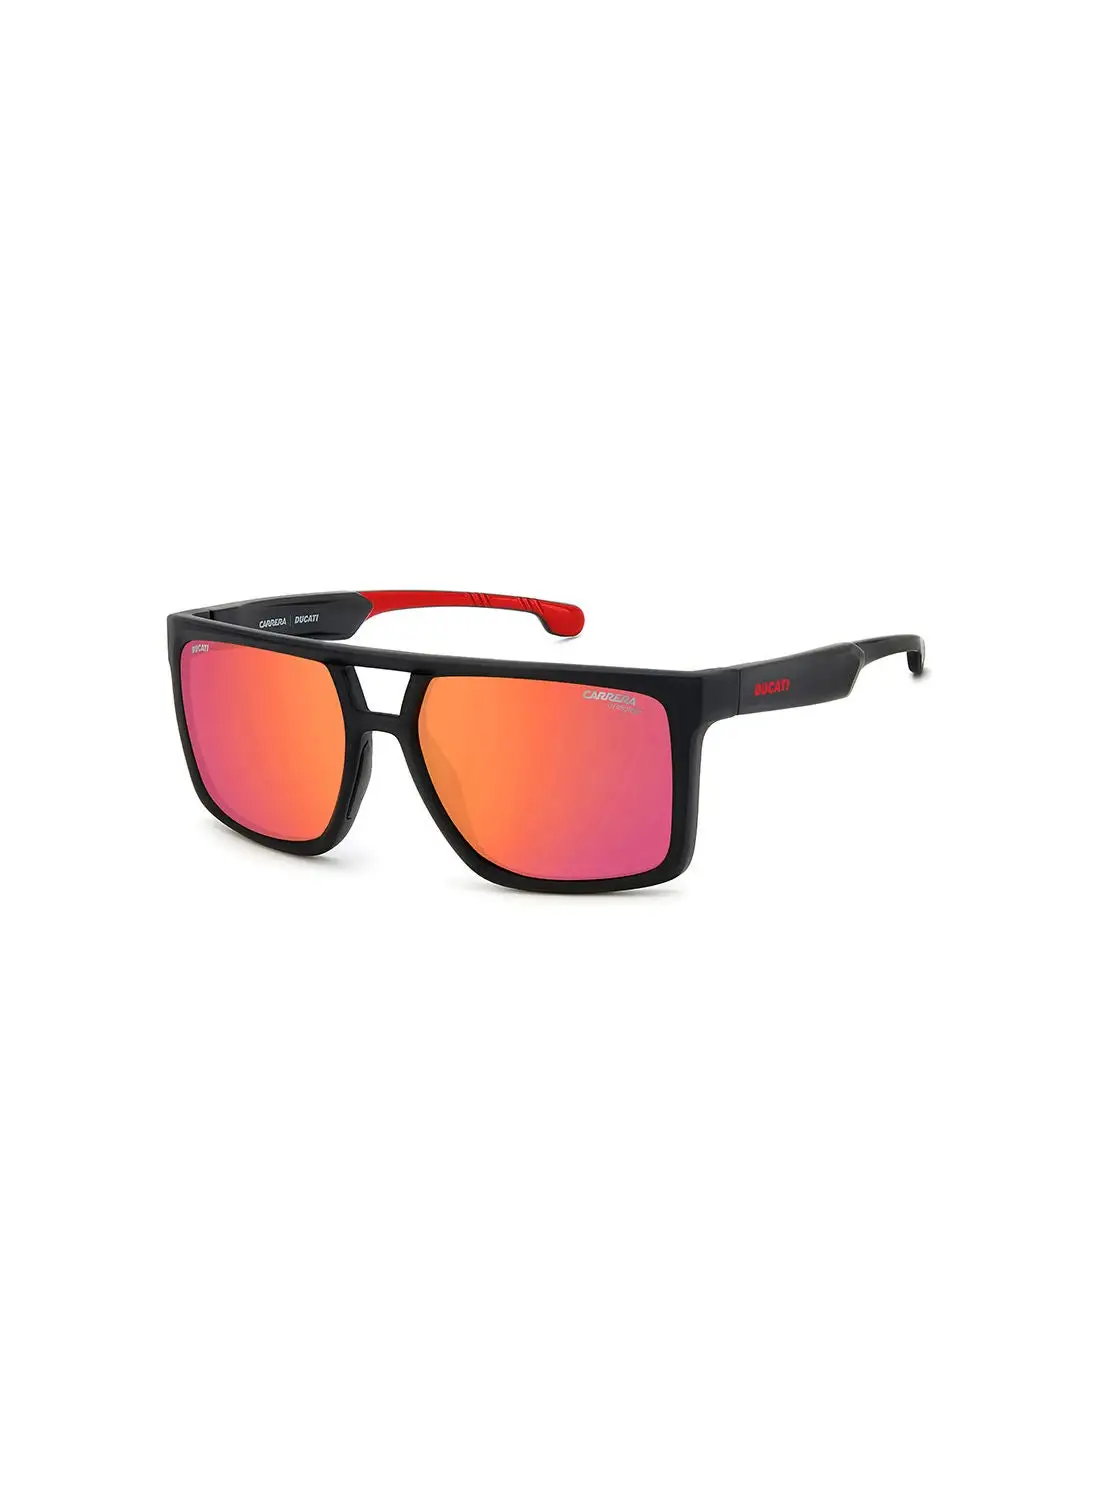 Carrera Men's UV Protection Sunglasses - Carduc 018/S Black Red 58 - Lens Size: 58 Mm